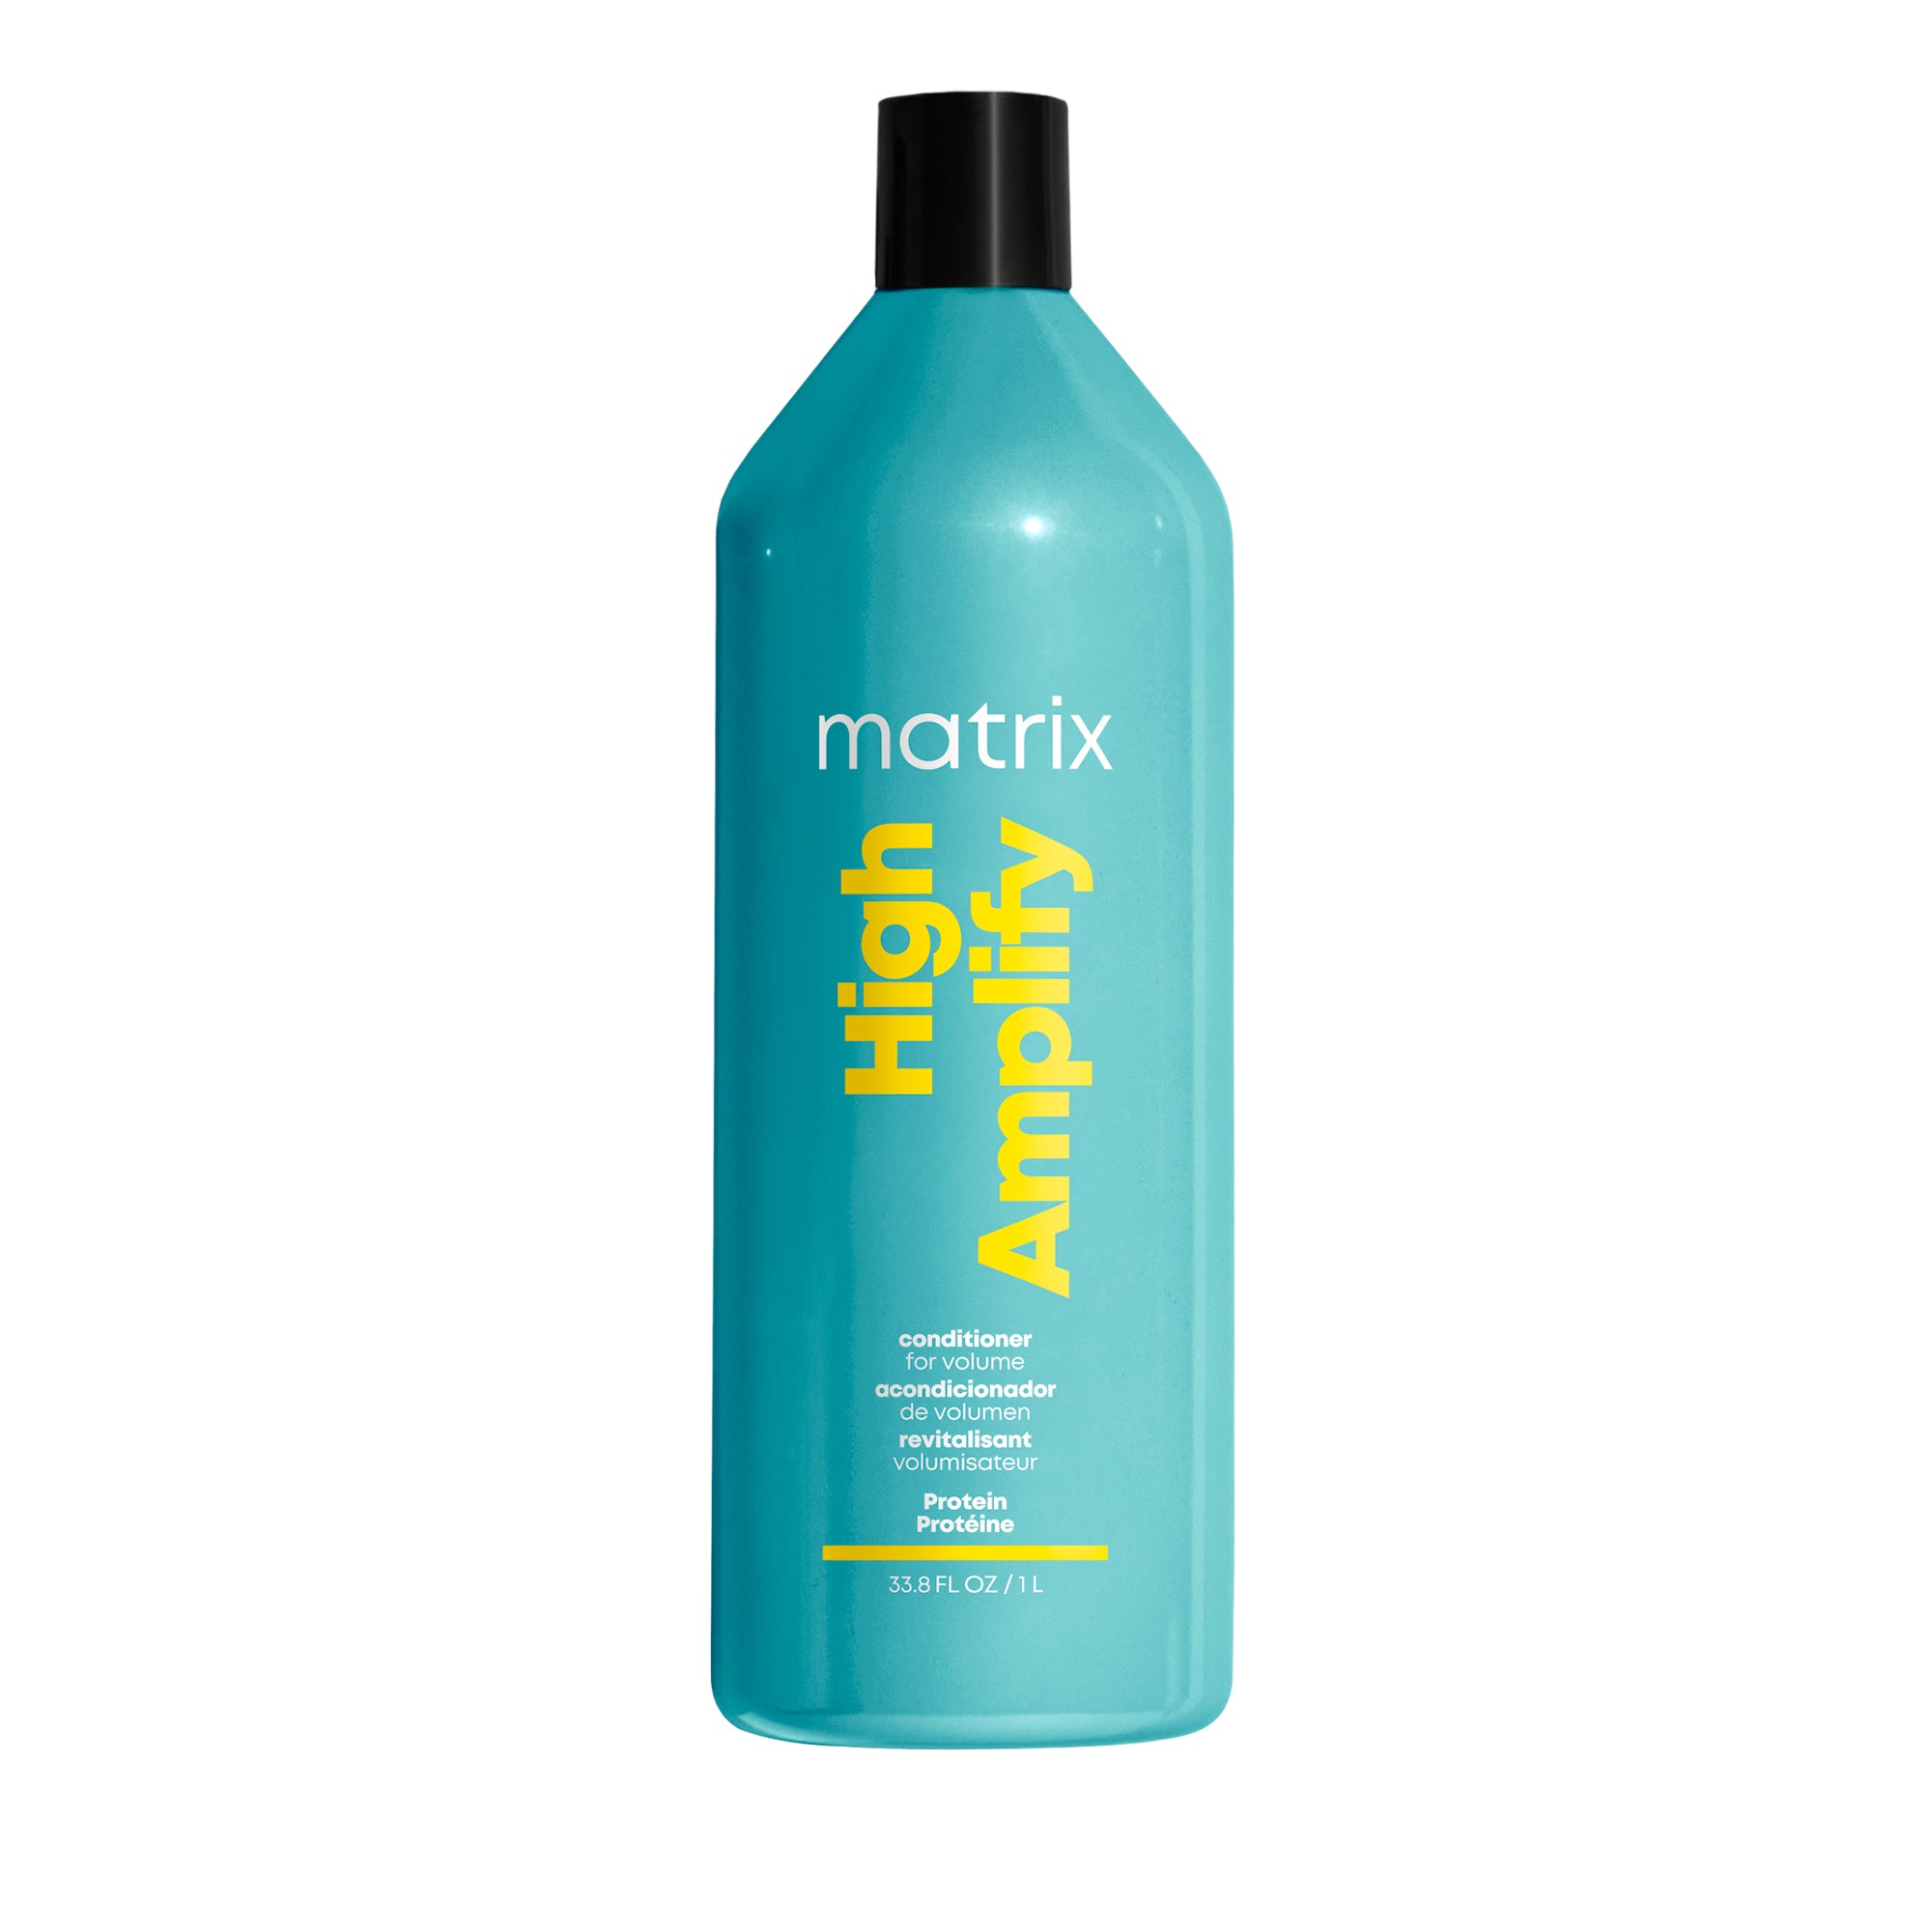 Matrix High Amplify Shampoo & Conditioner Duo 33.8oz ($72 Value) / DUO